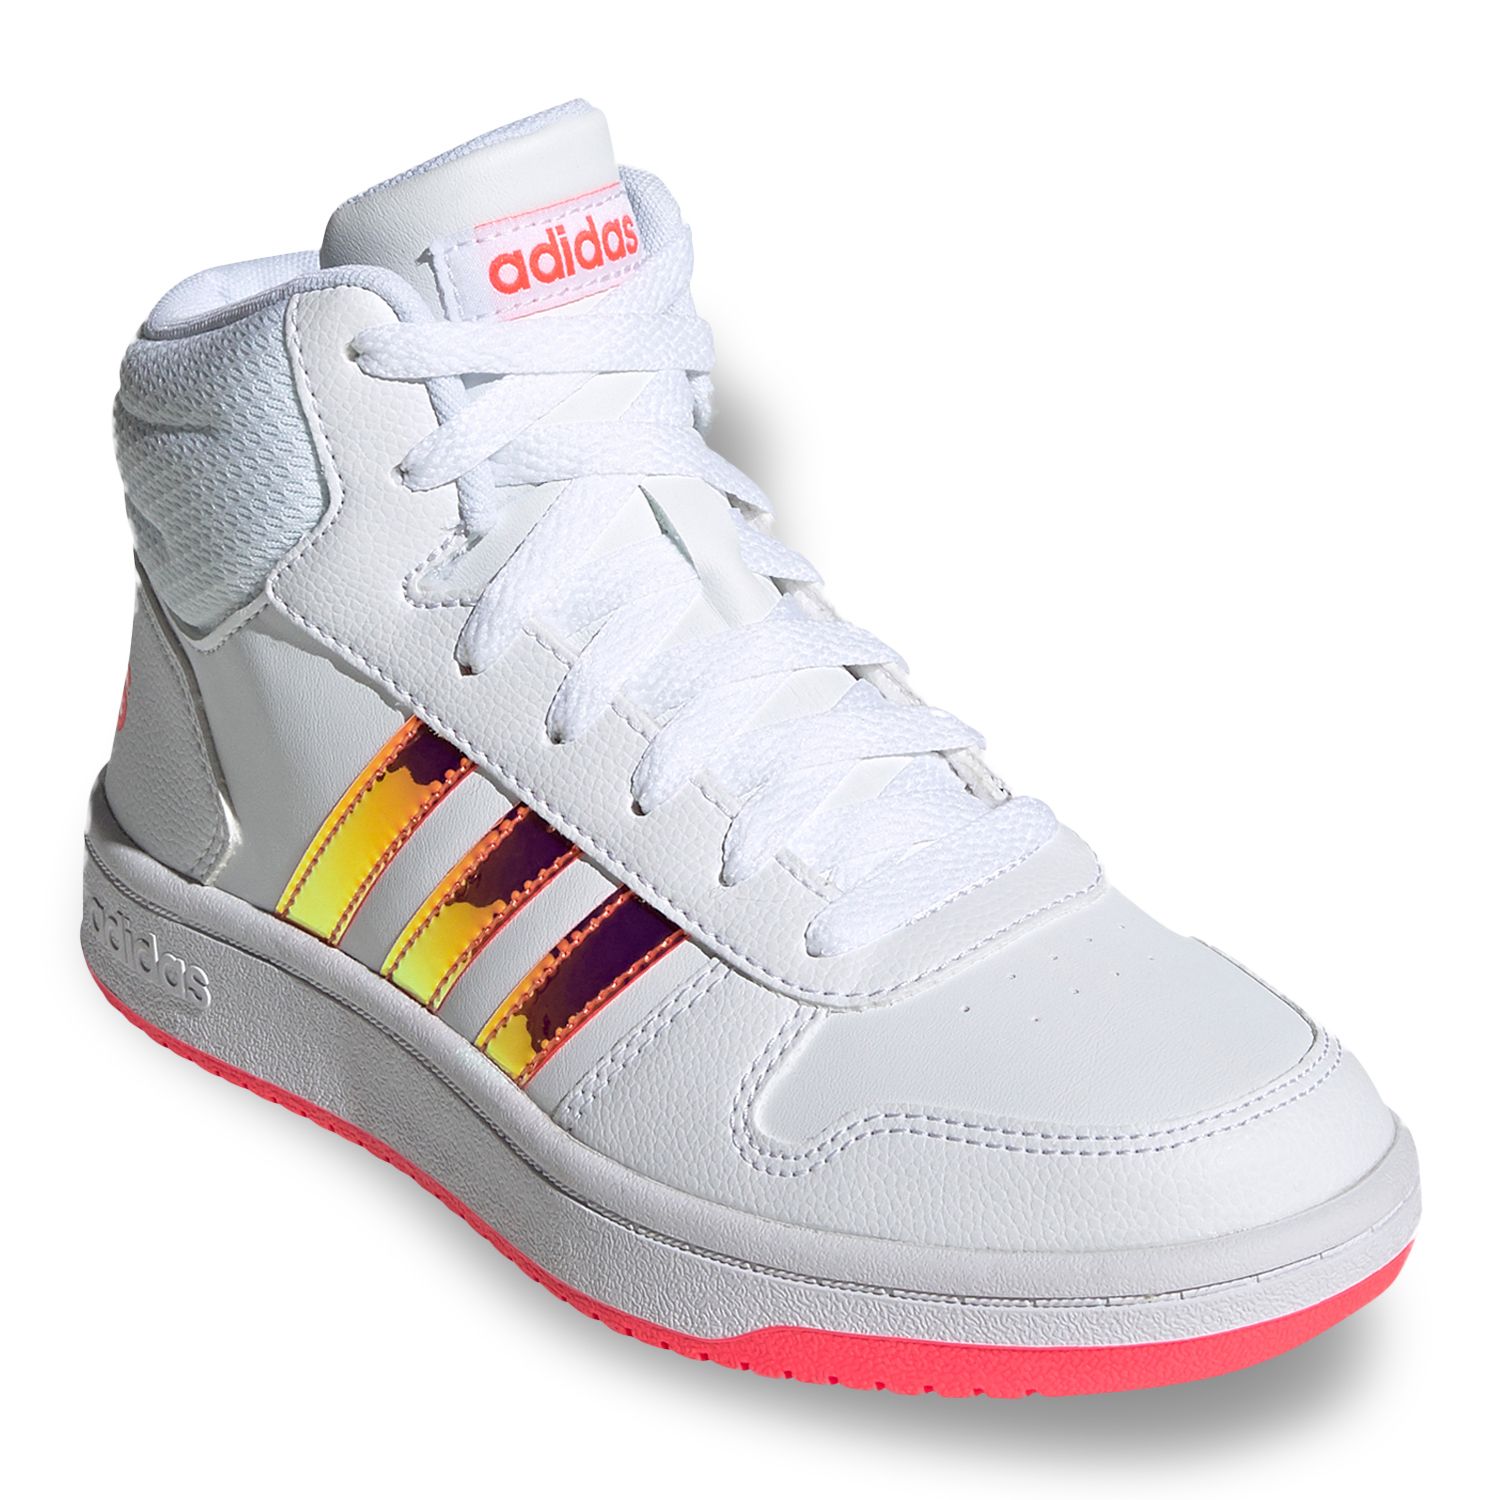 adidas hoops basketball shoes